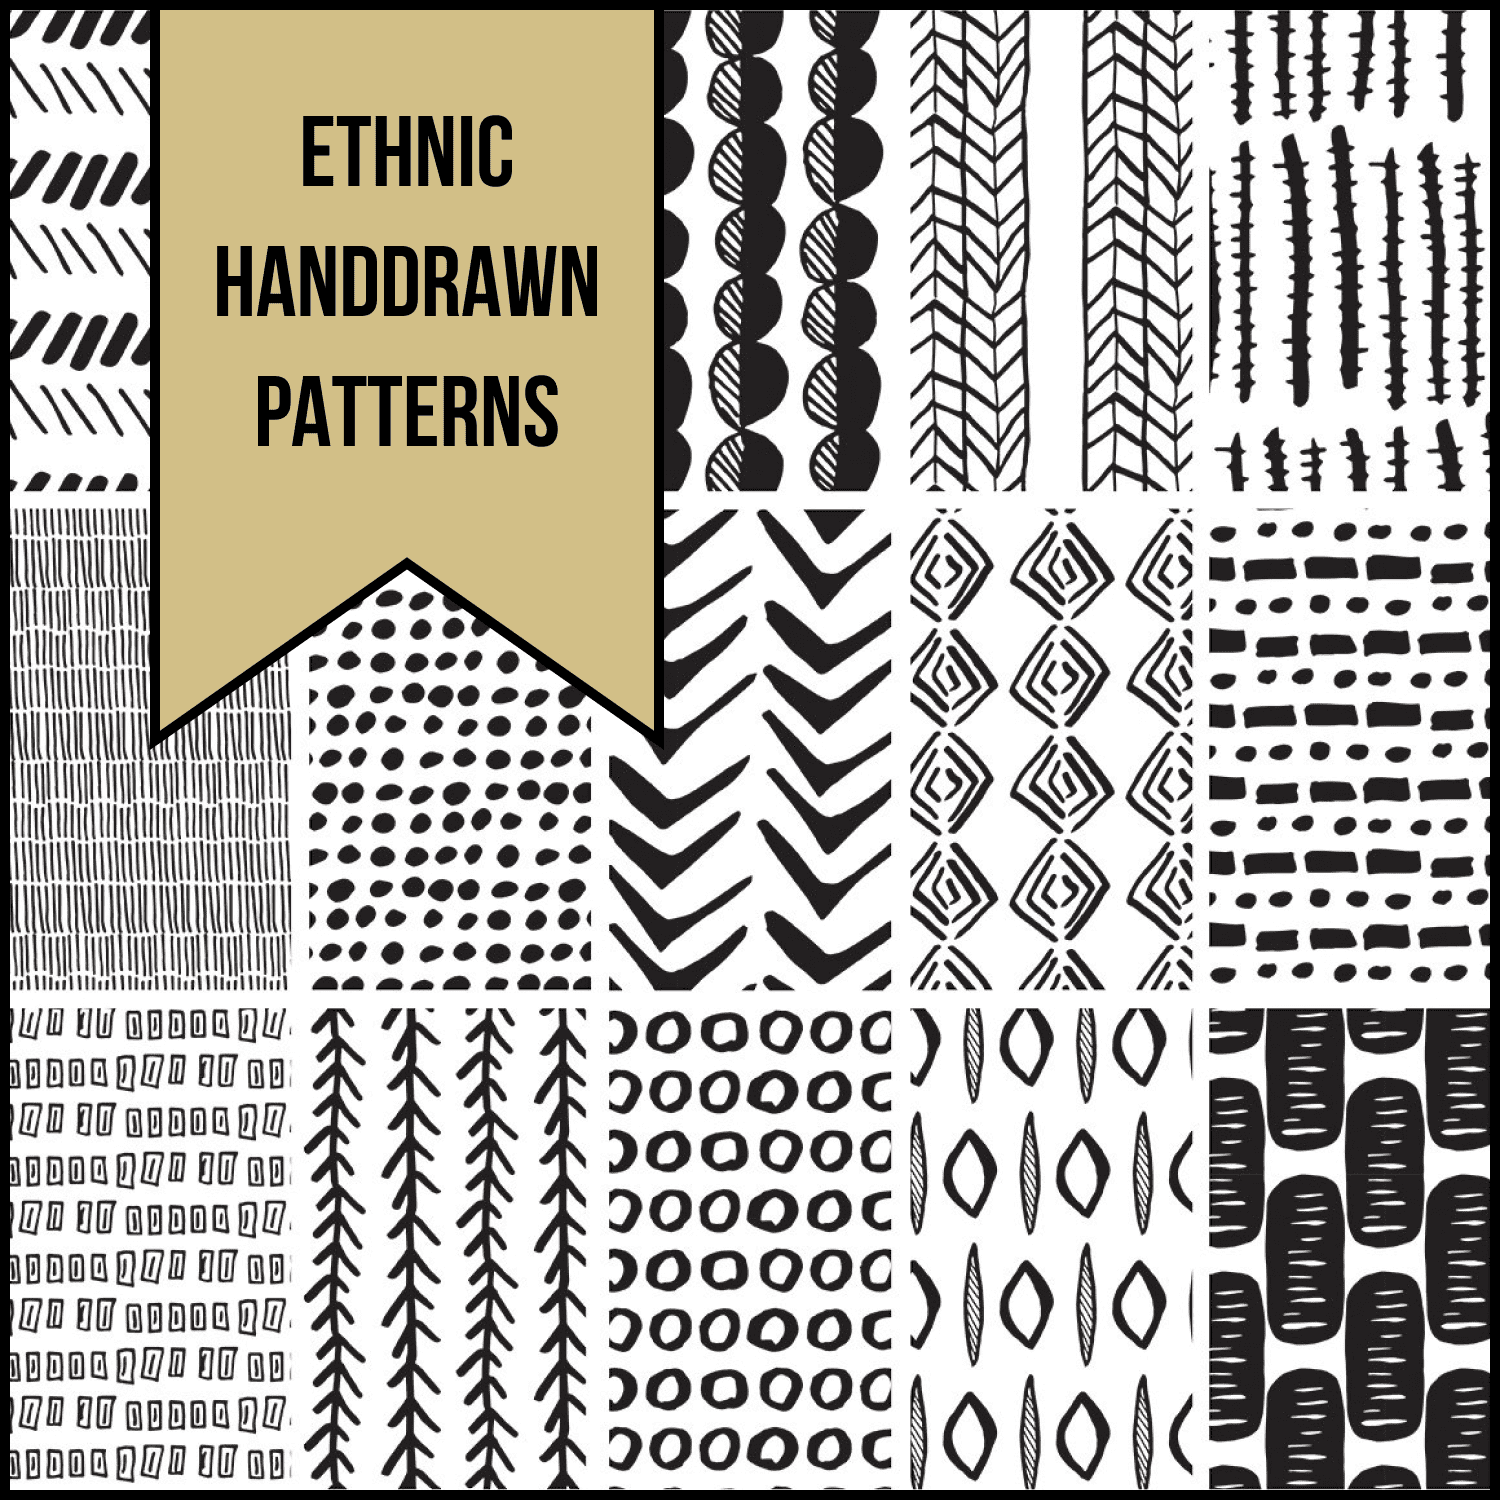 Ethnic Handdrawn Patterns.